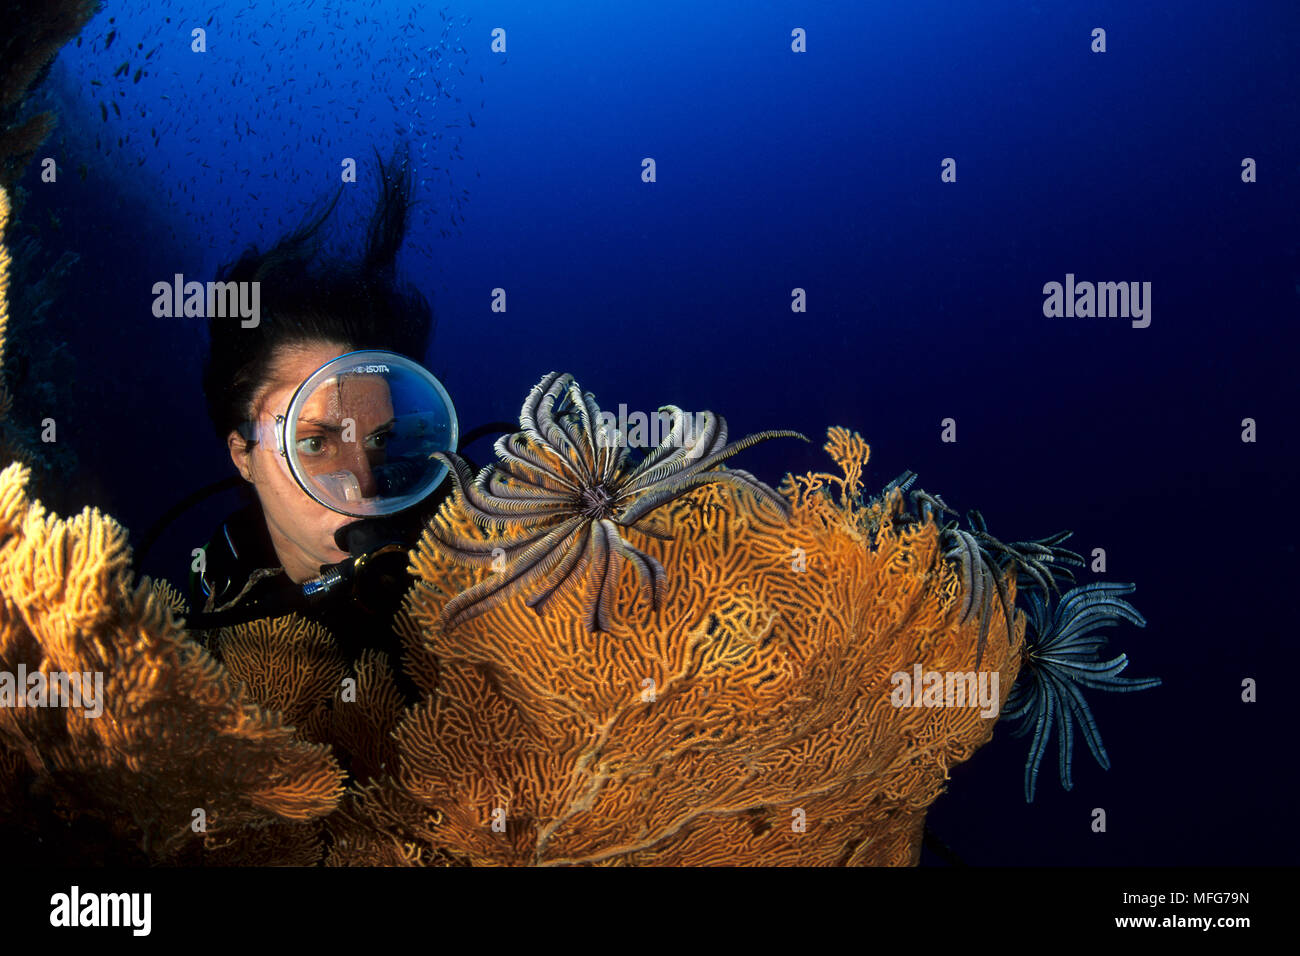 Scuba Diver cercando crinoidi sulla ventola gorgonia, Subergorgia mollis, Aldabra Atoll, patrimonio mondiale naturale, Seychelles, Oceano Indiano Data: 24.06.0 Foto Stock